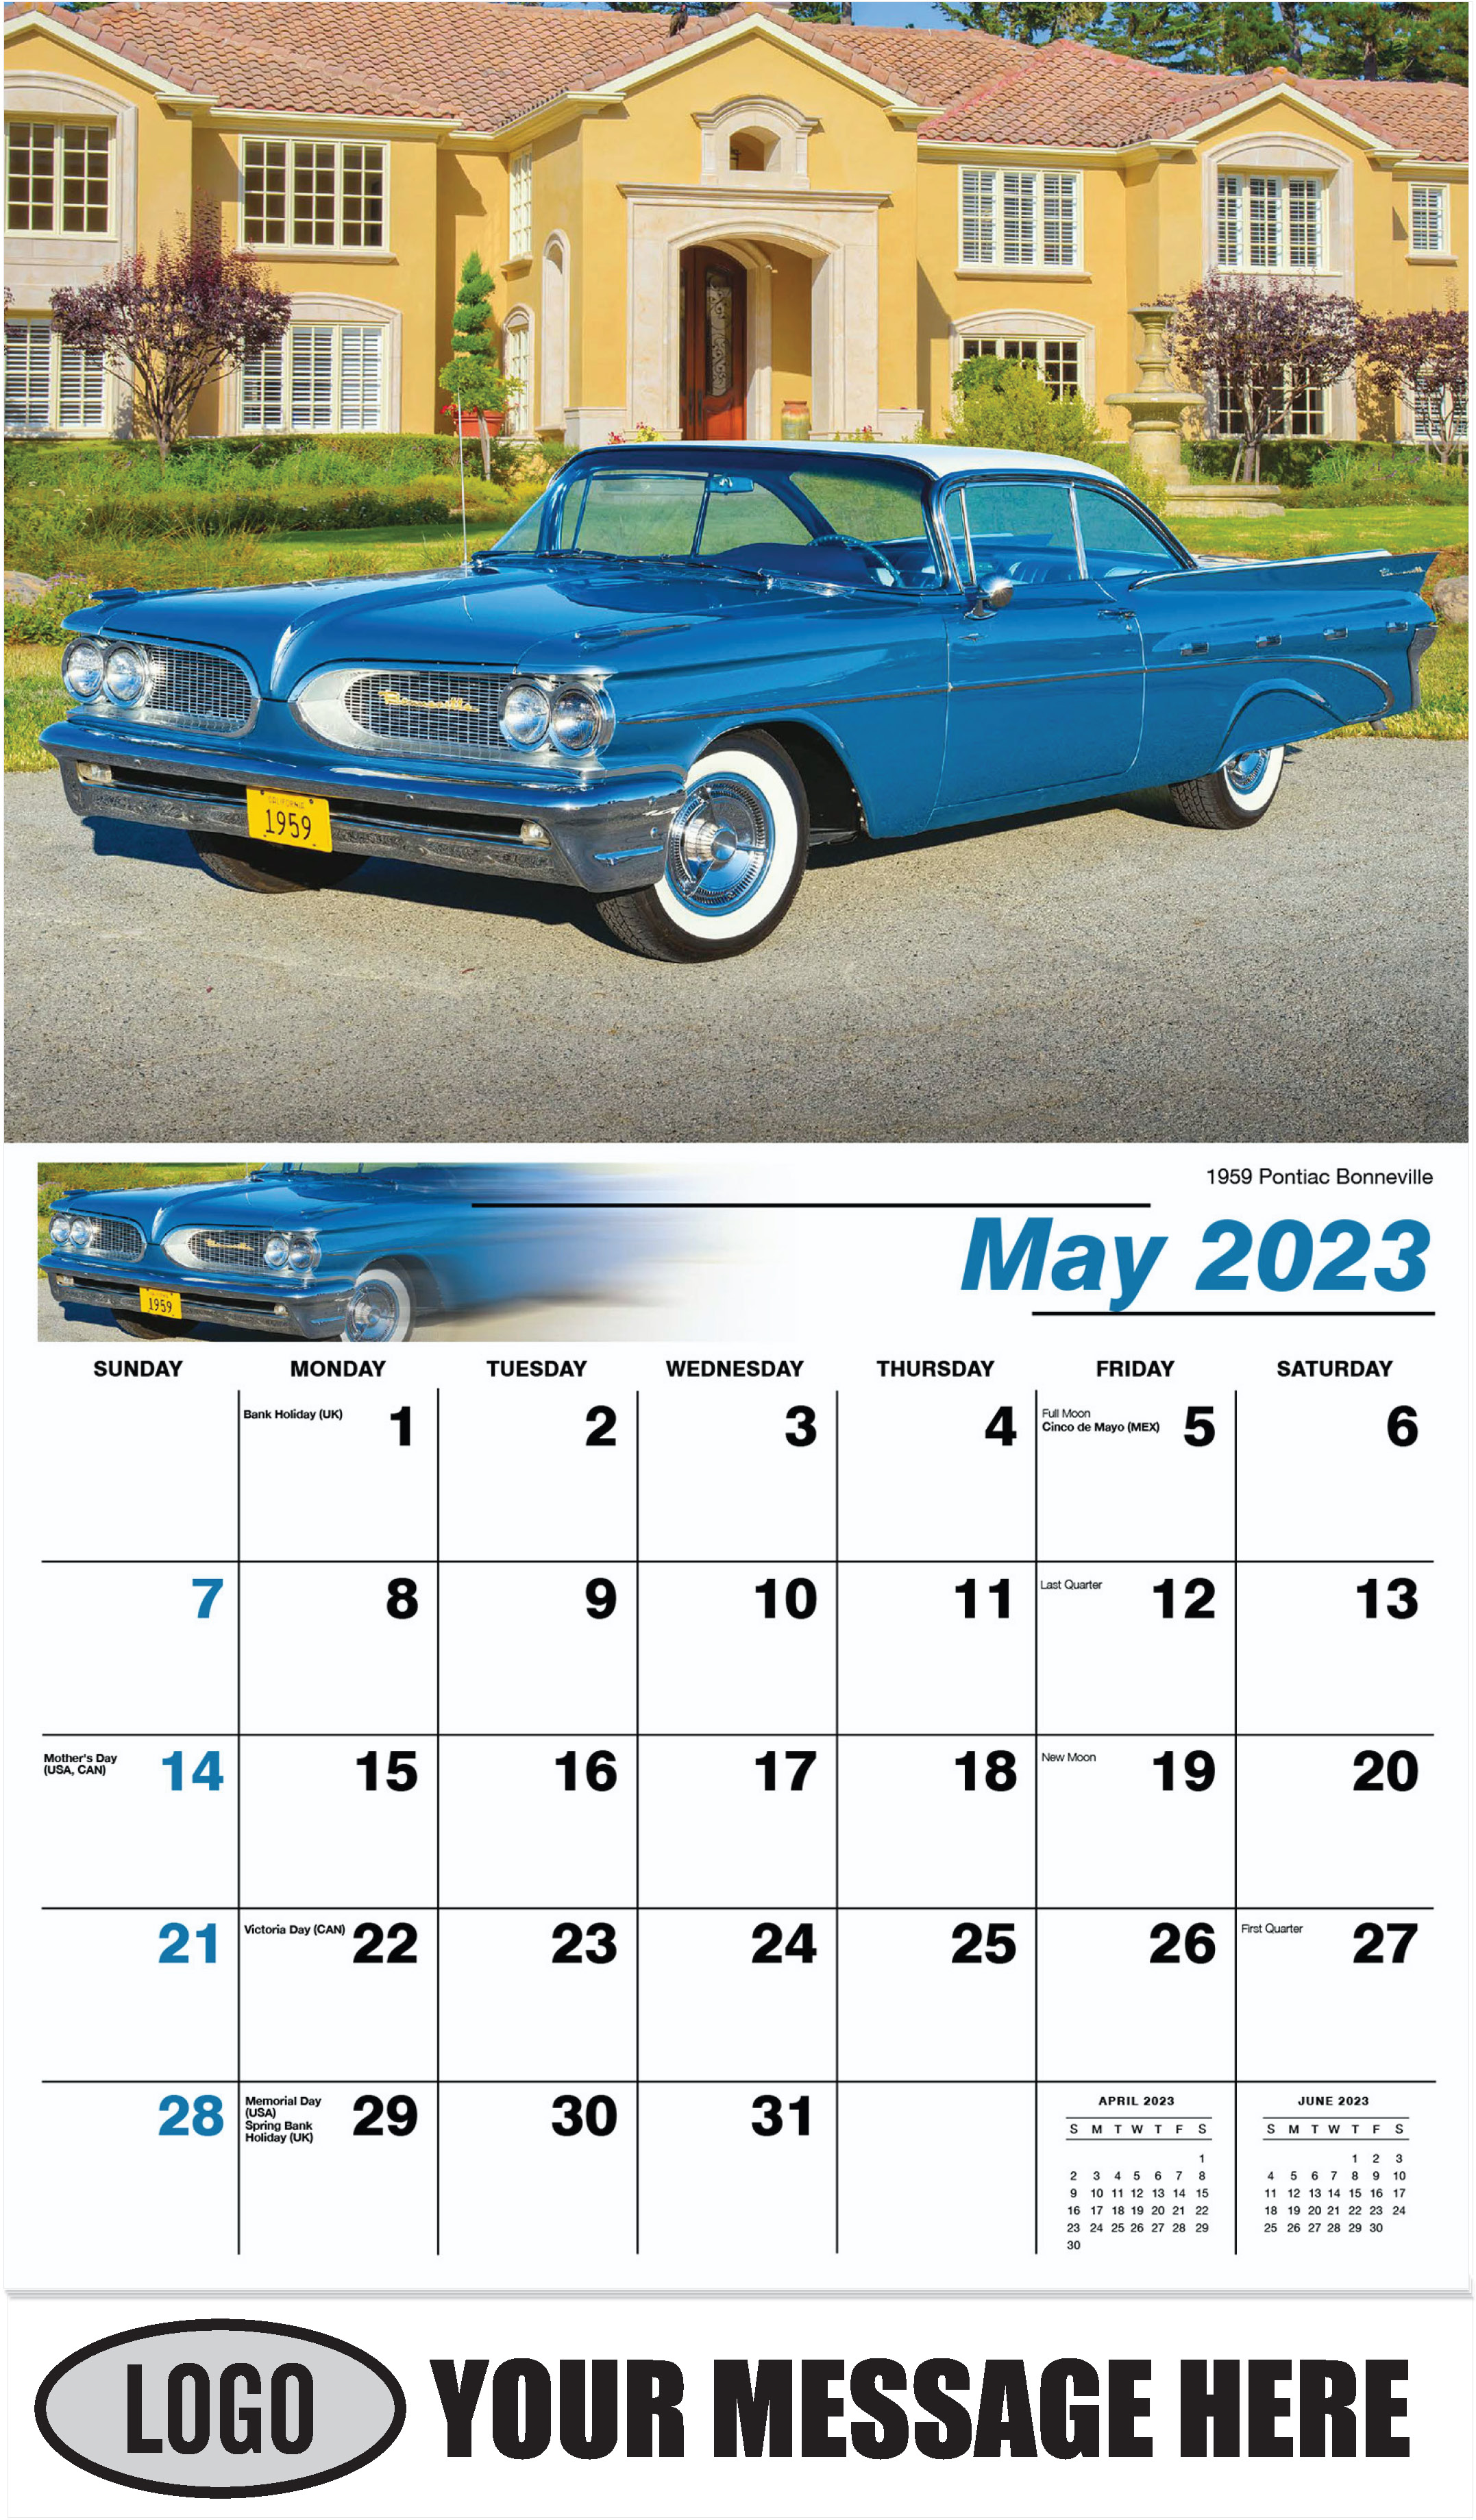 1959 Pontiac Bonneville - May - GM Classics 2023 Promotional Calendar